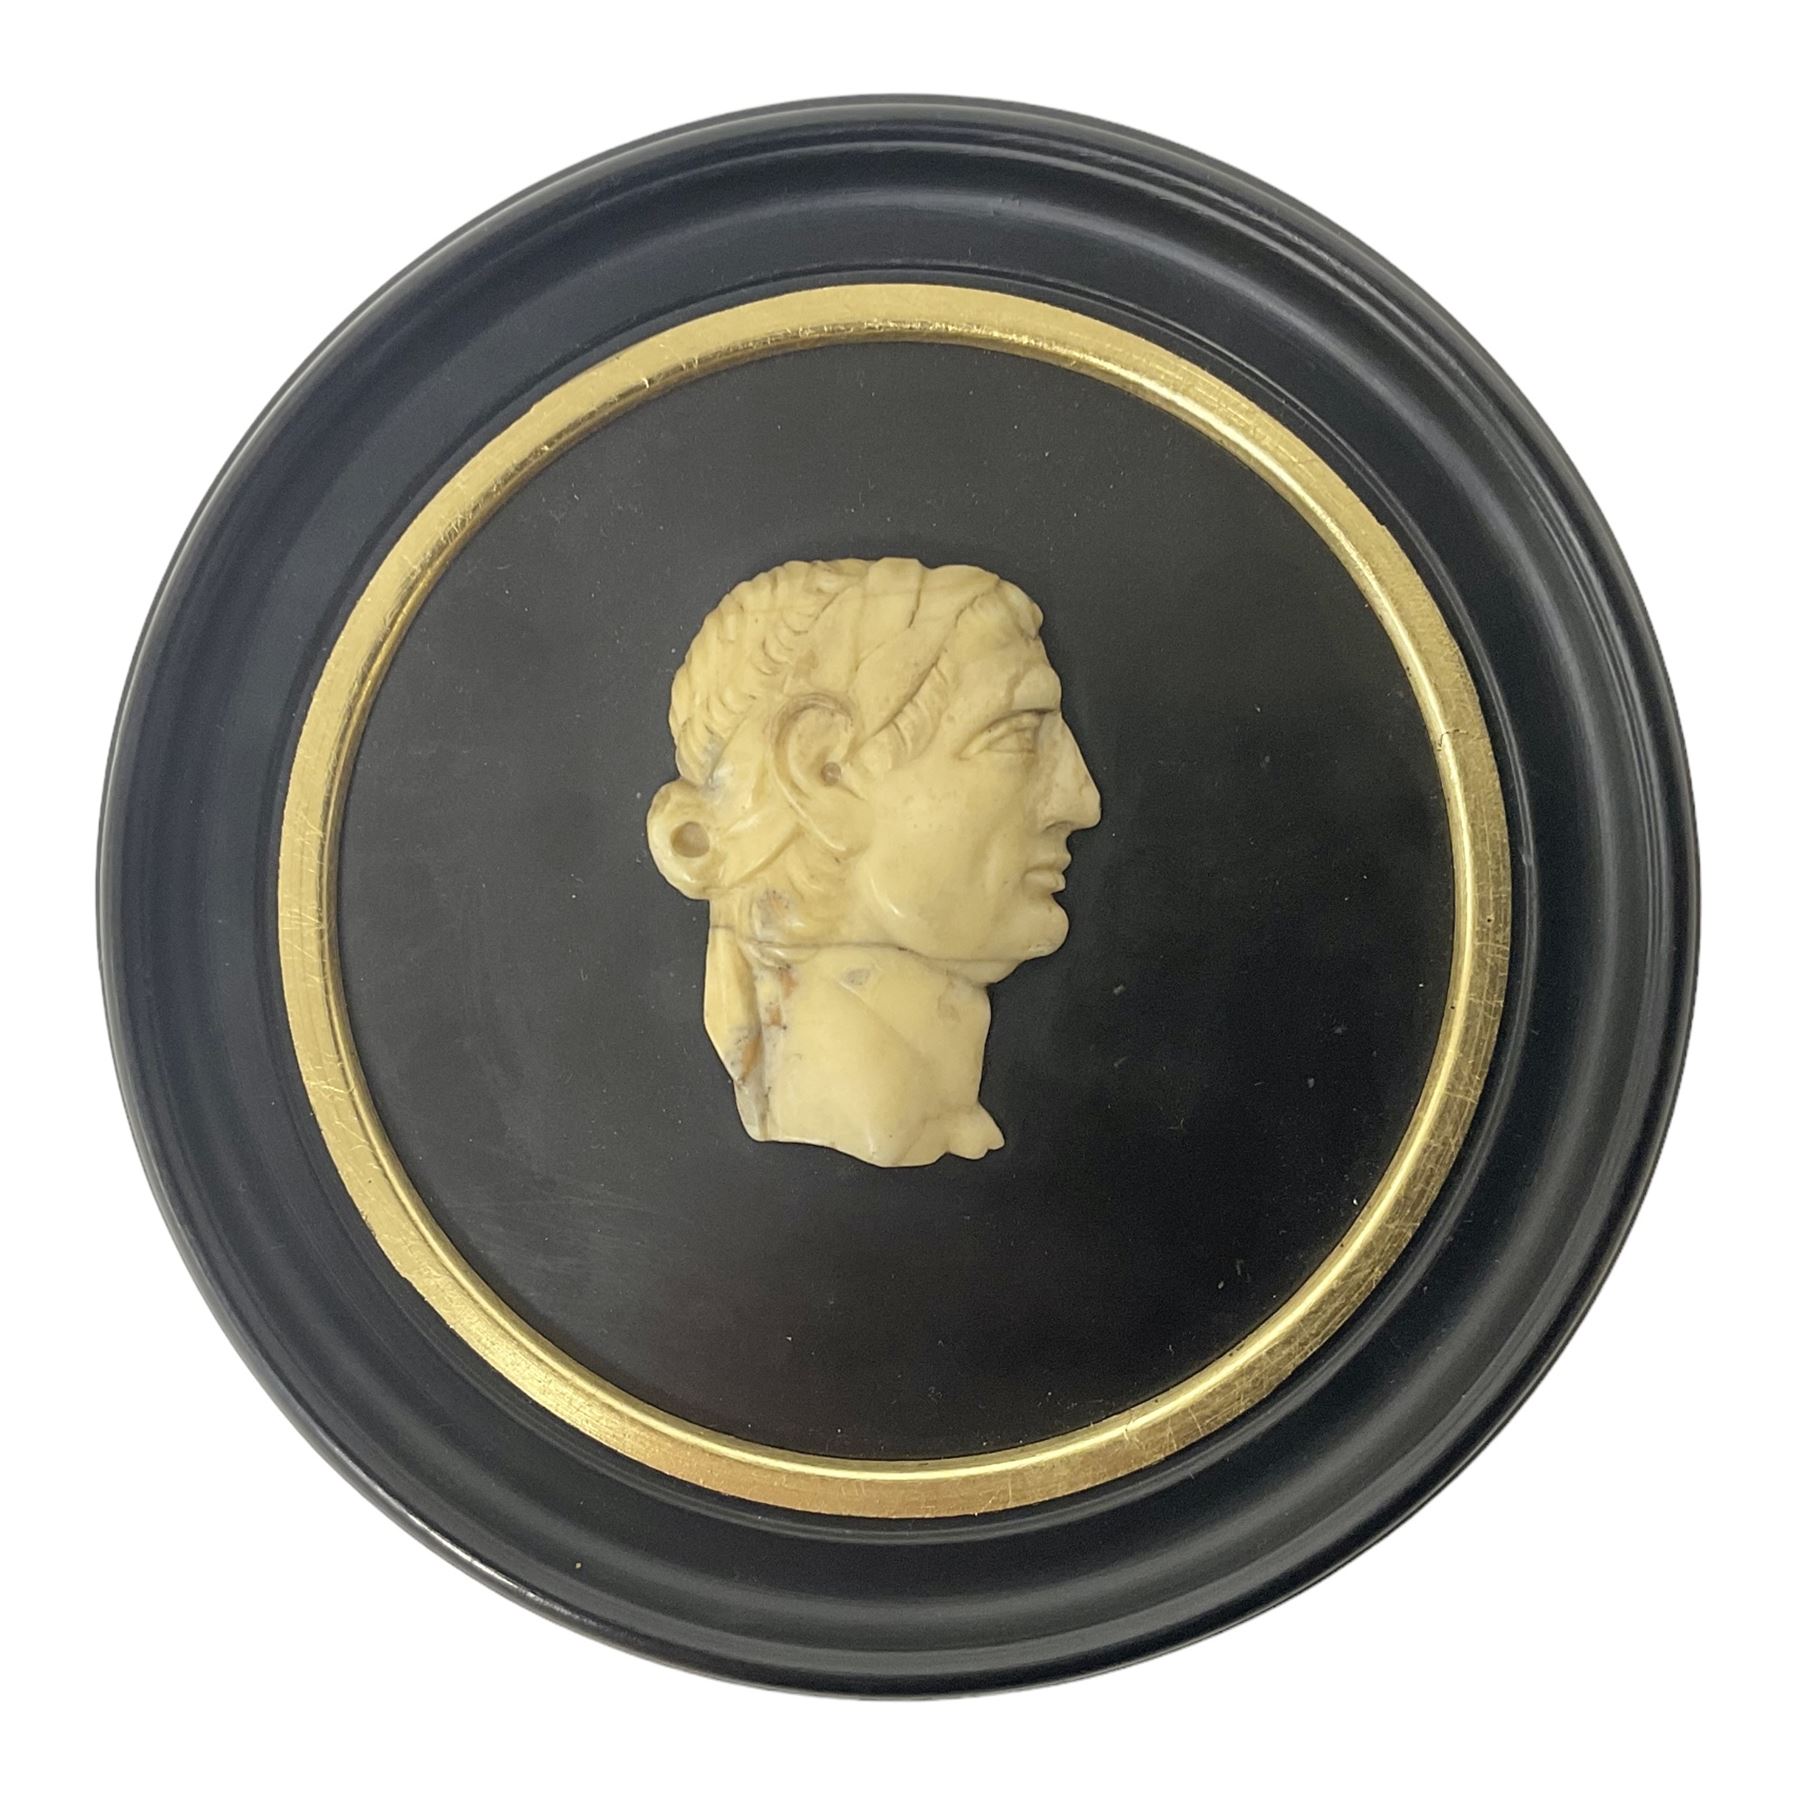 Grand Tour souvenir marble roundel depicting profile portrait of 'The Emperor Nero'